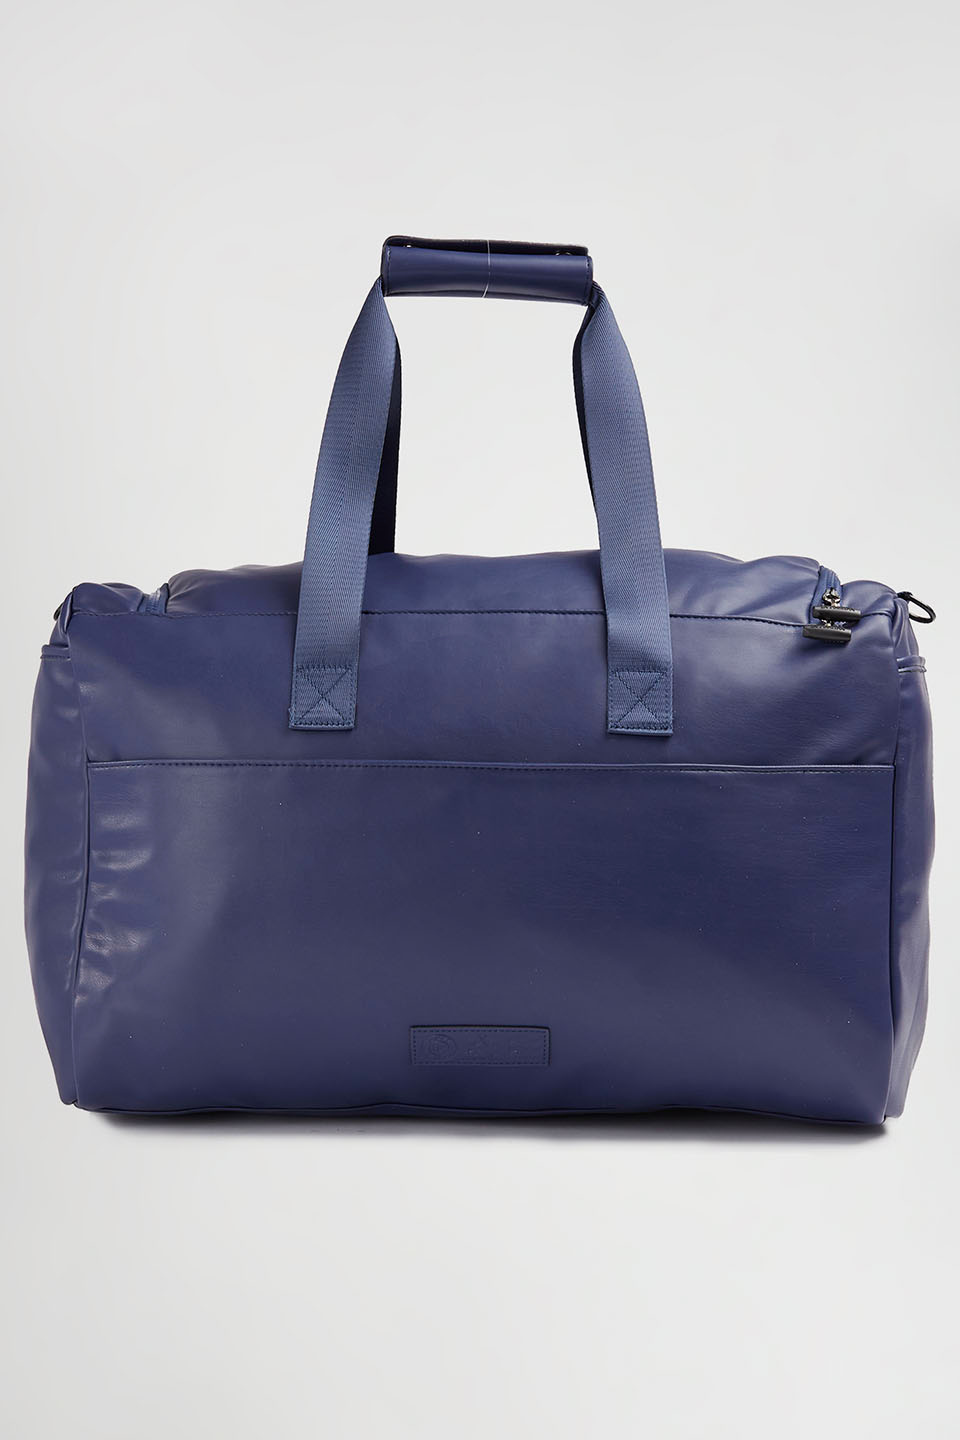 PU leather duffel bag - La Martina - Official Online Shop